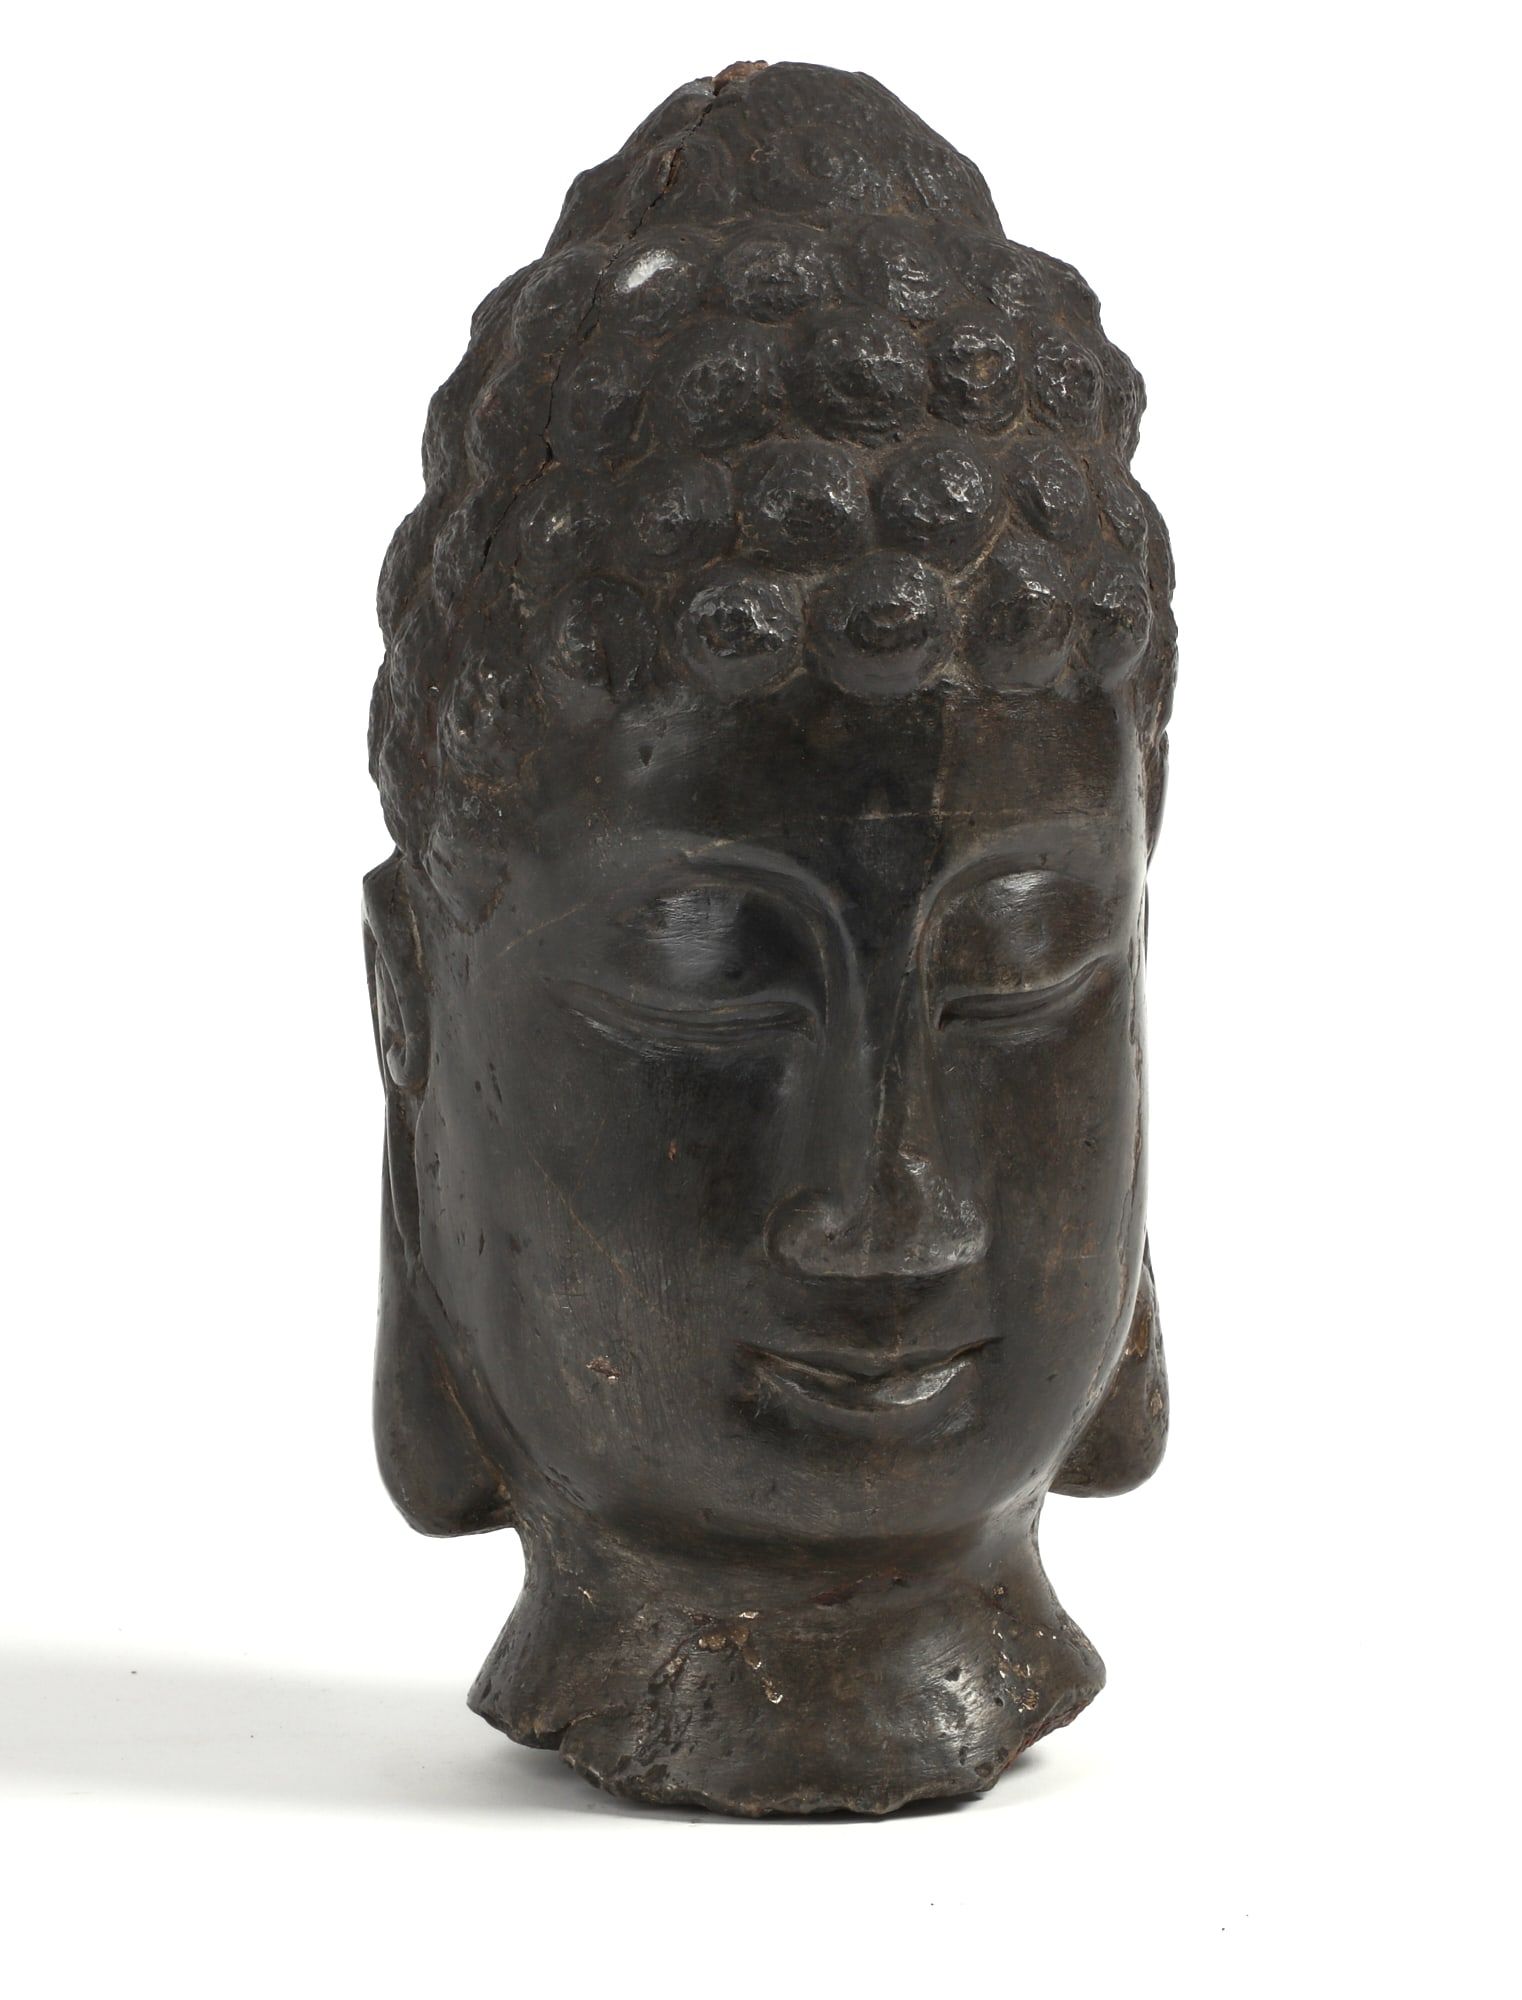 A STONE BUDDHA HEADA stone buddha